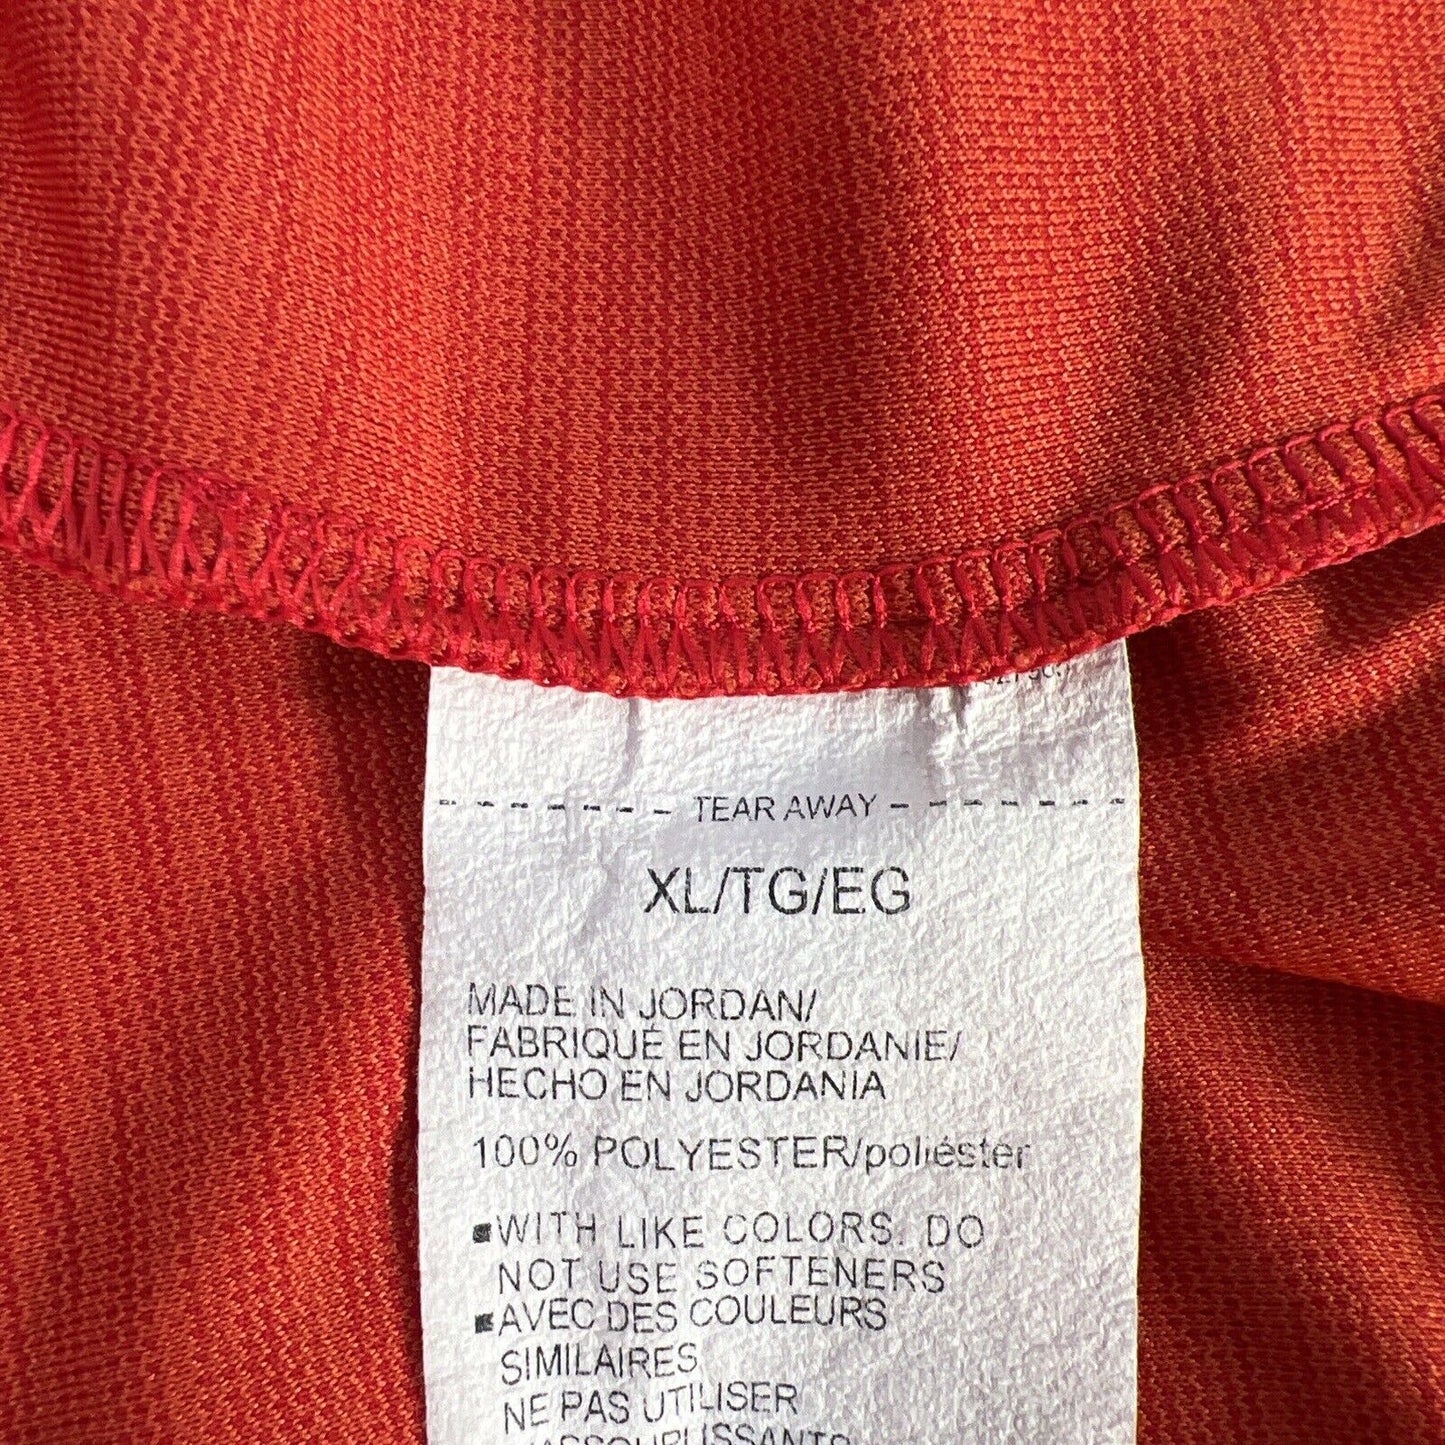 Under Armour Men's Red/Orange Short Sleeve HeatGear Athletic Shirt - XL